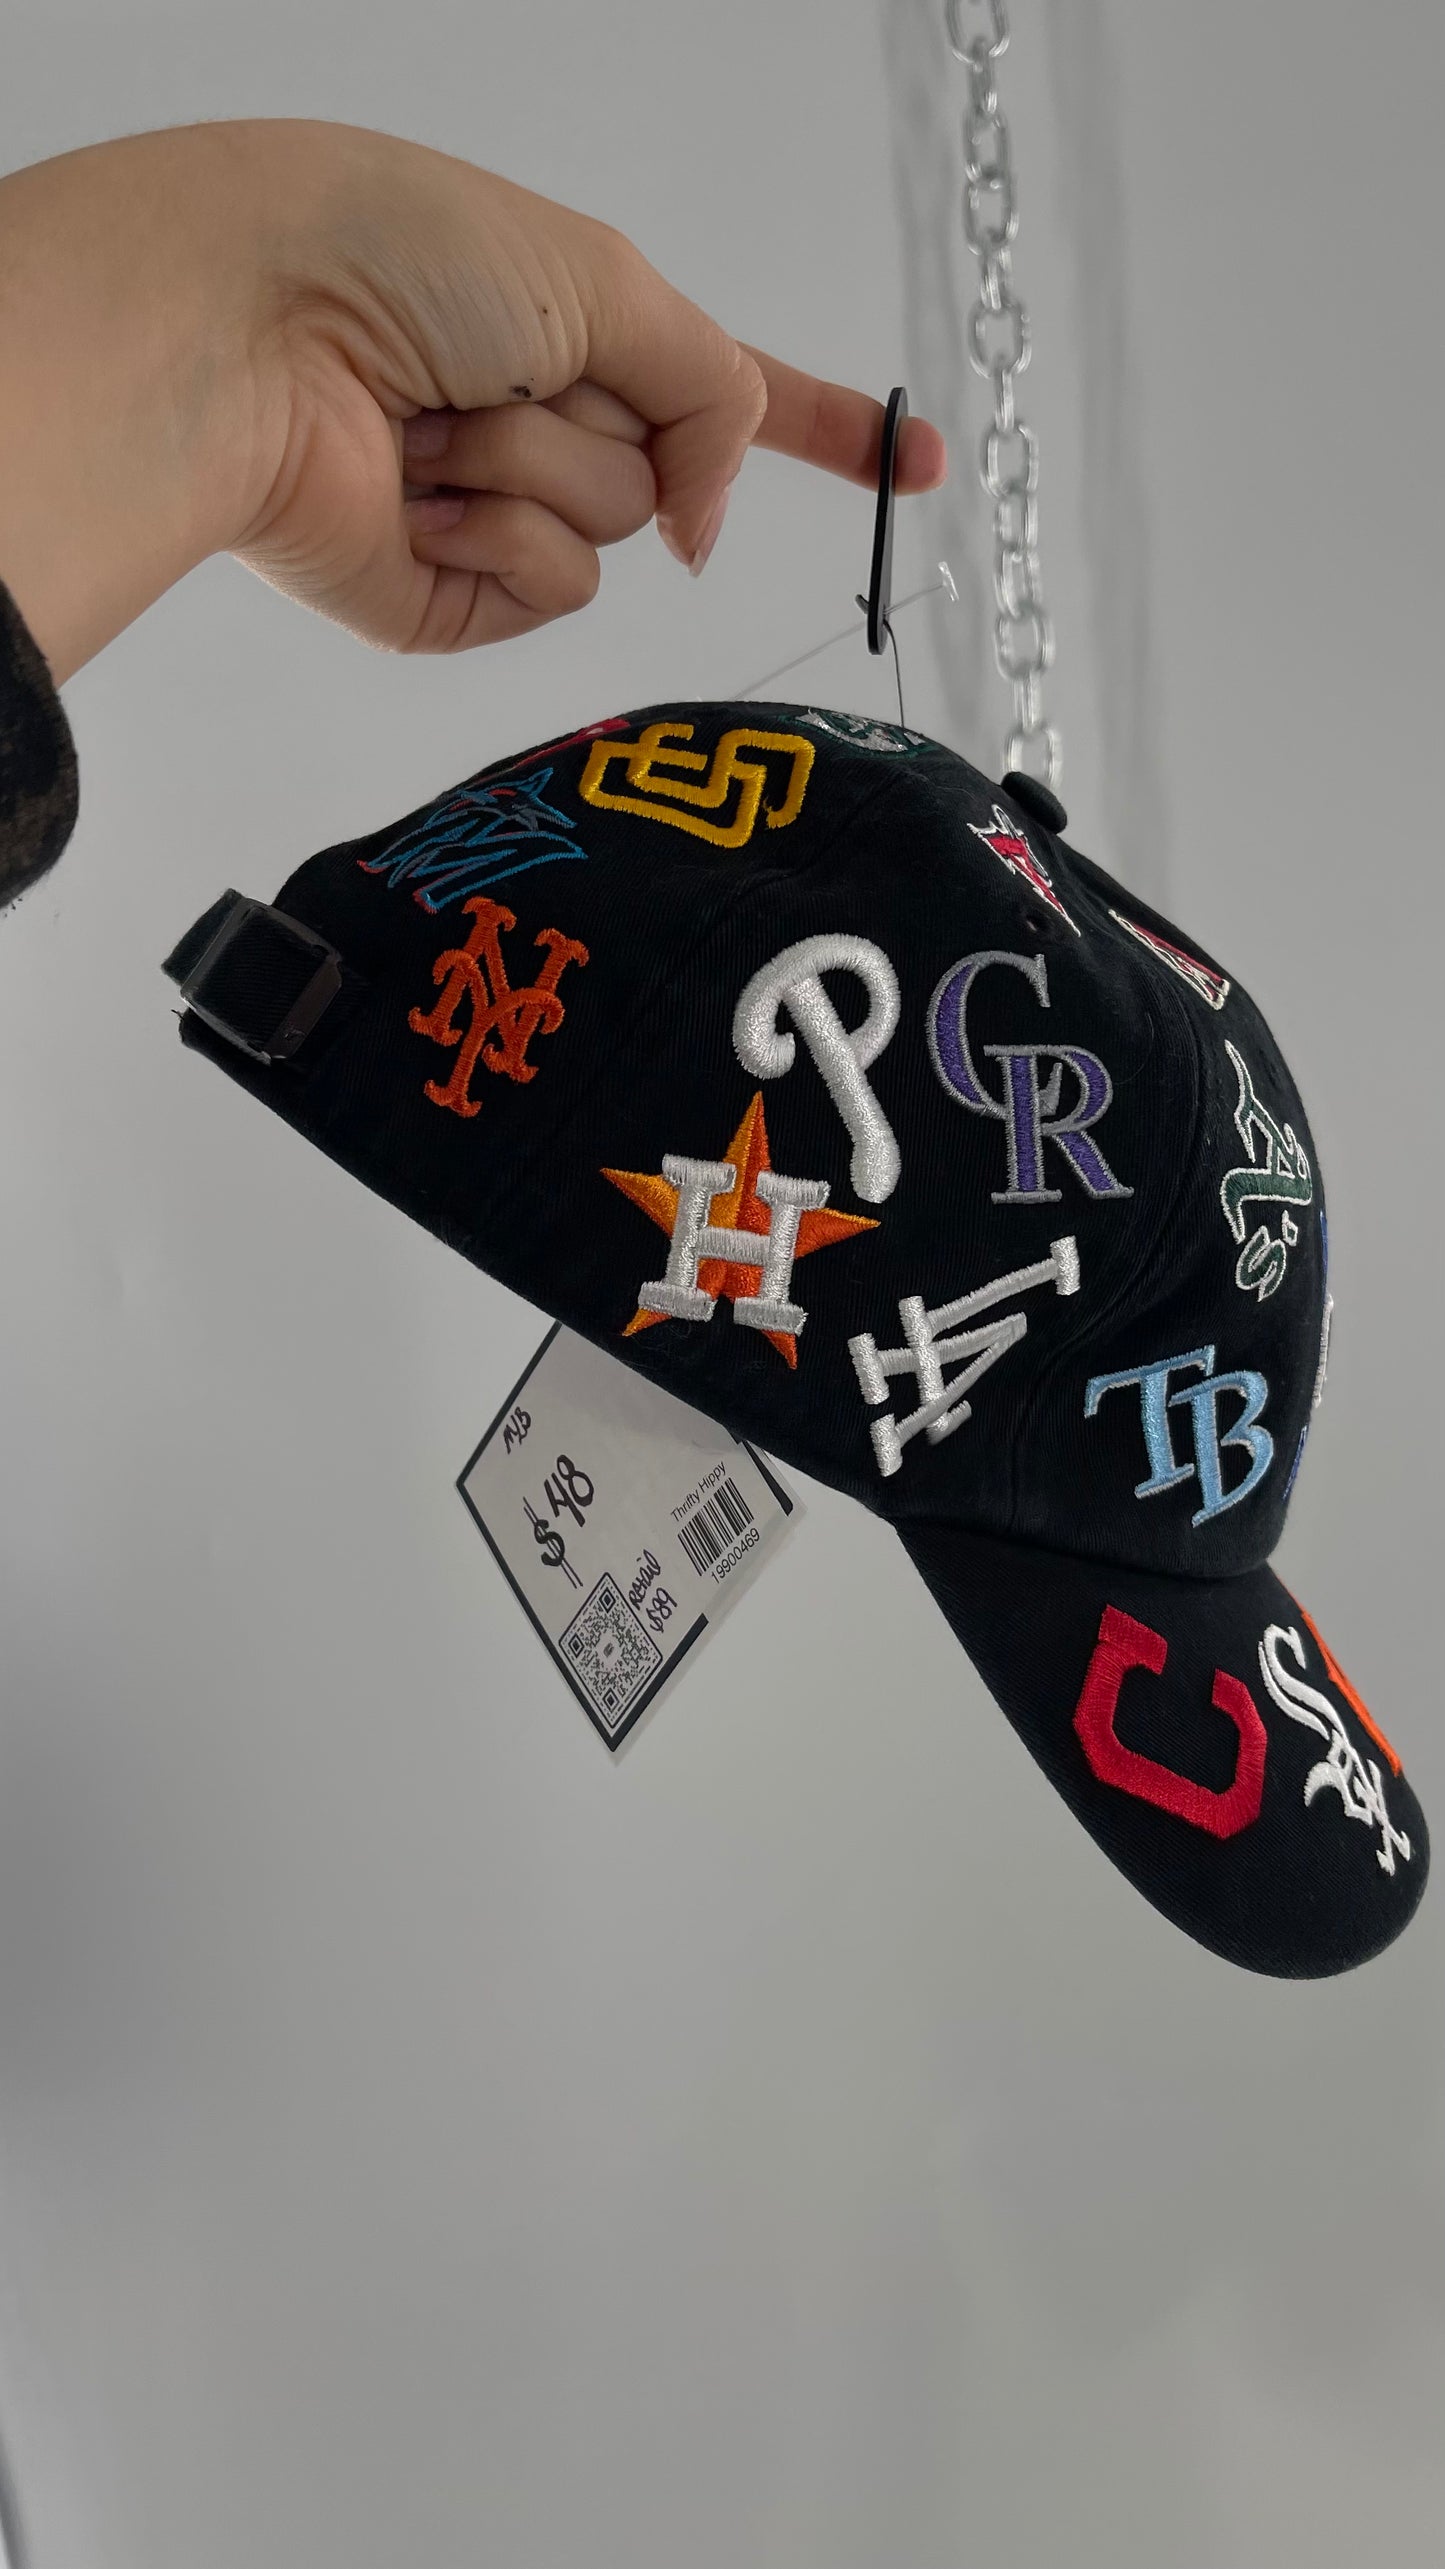 MLB Black Logo Baseball Hat